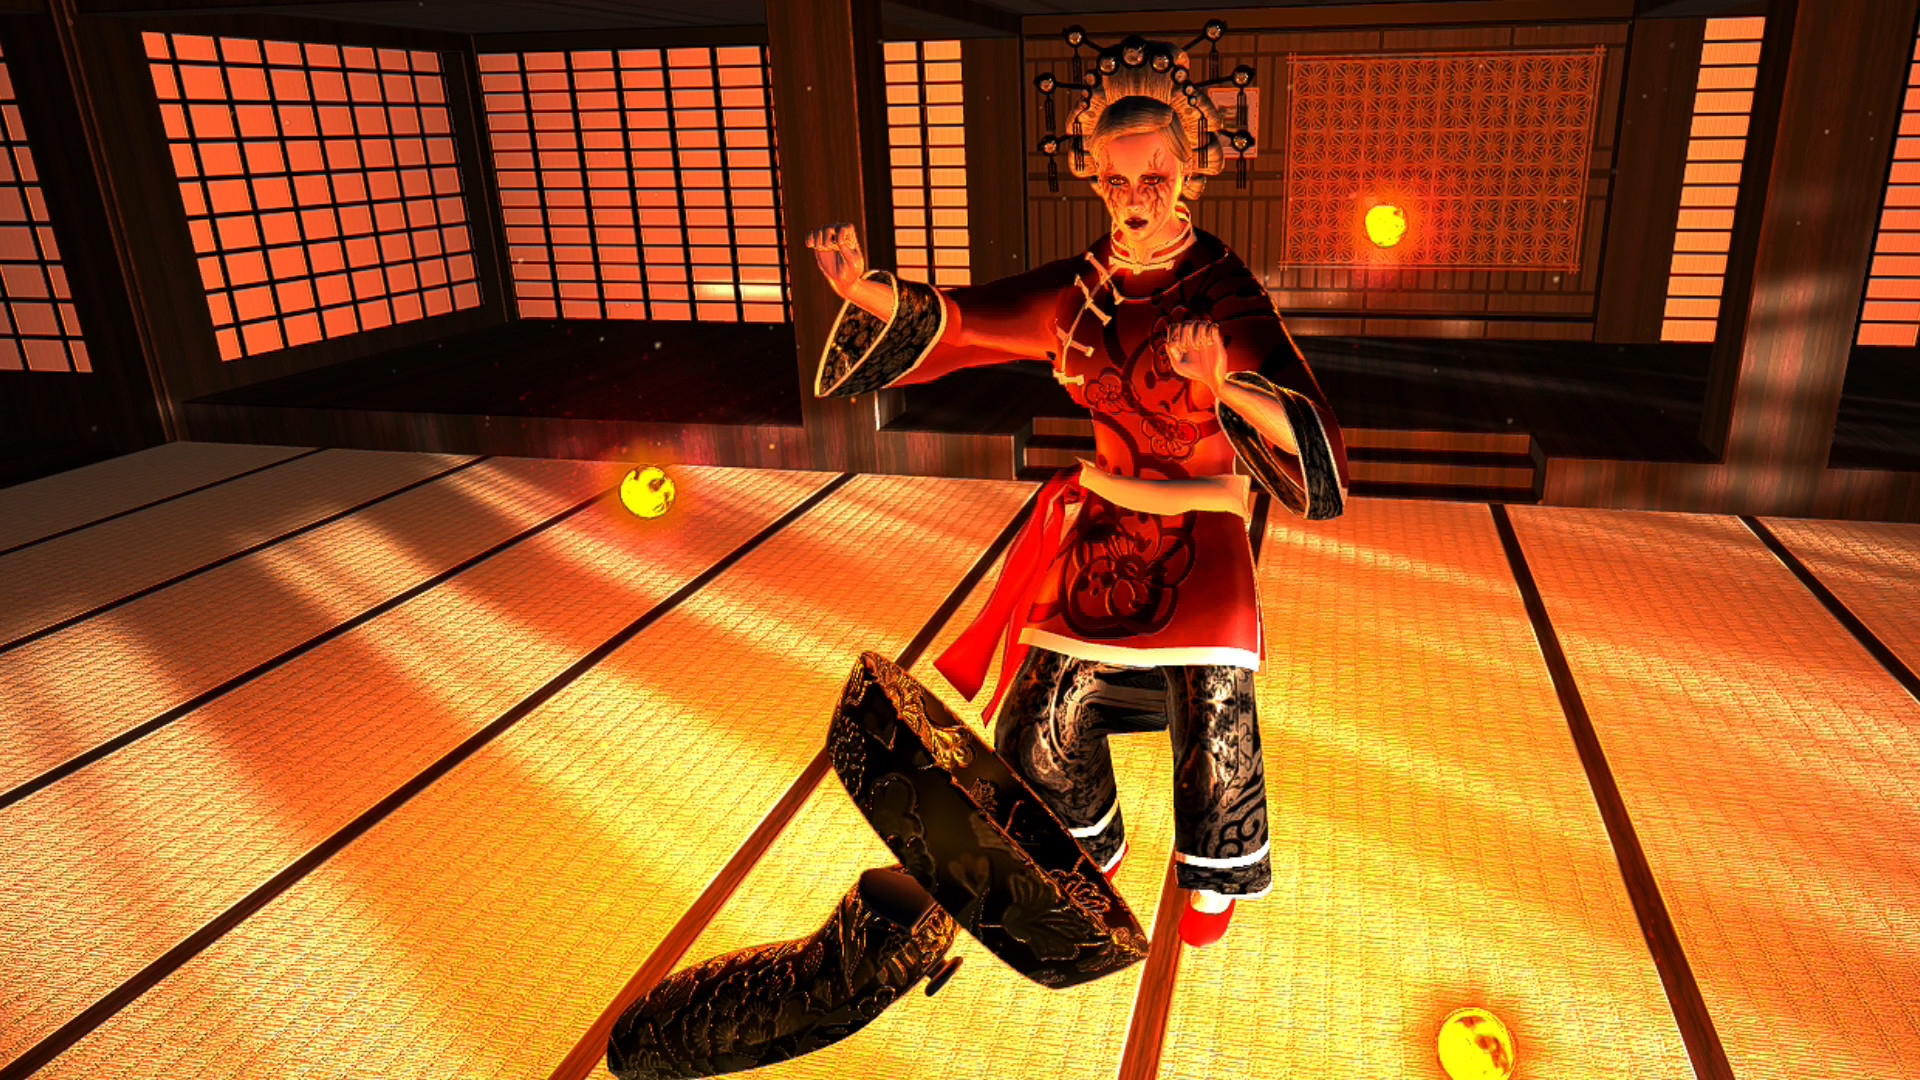 Dragon Fist: VR Kung Fu Steam CD Key